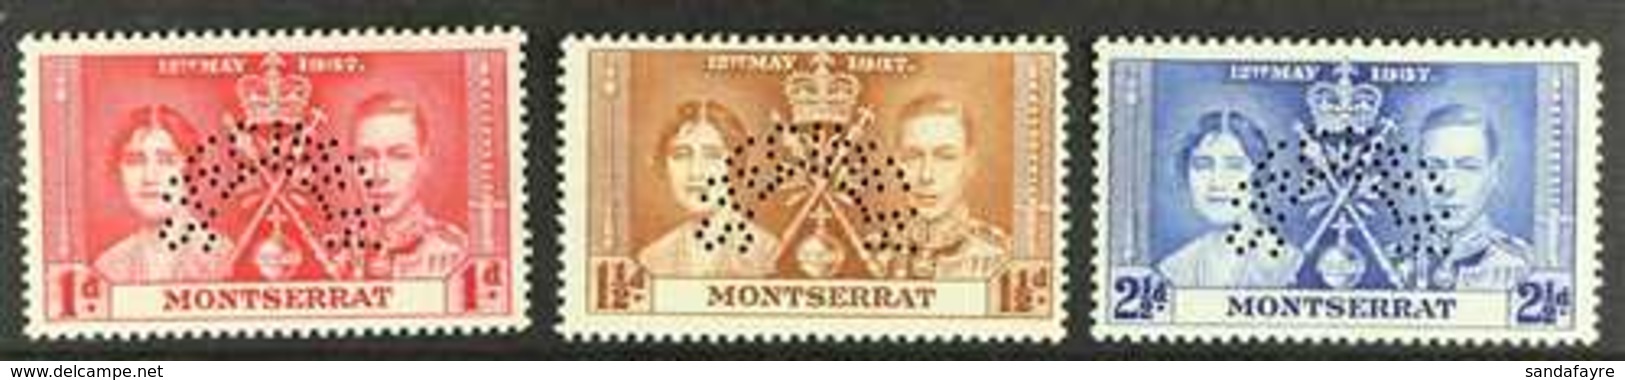 1937  Coronation Set, Perf. "SPECIMEN", SG 98/100s, Fine Never Hinged Mint. (3 Stamps) For More Images, Please Visit Htt - Montserrat